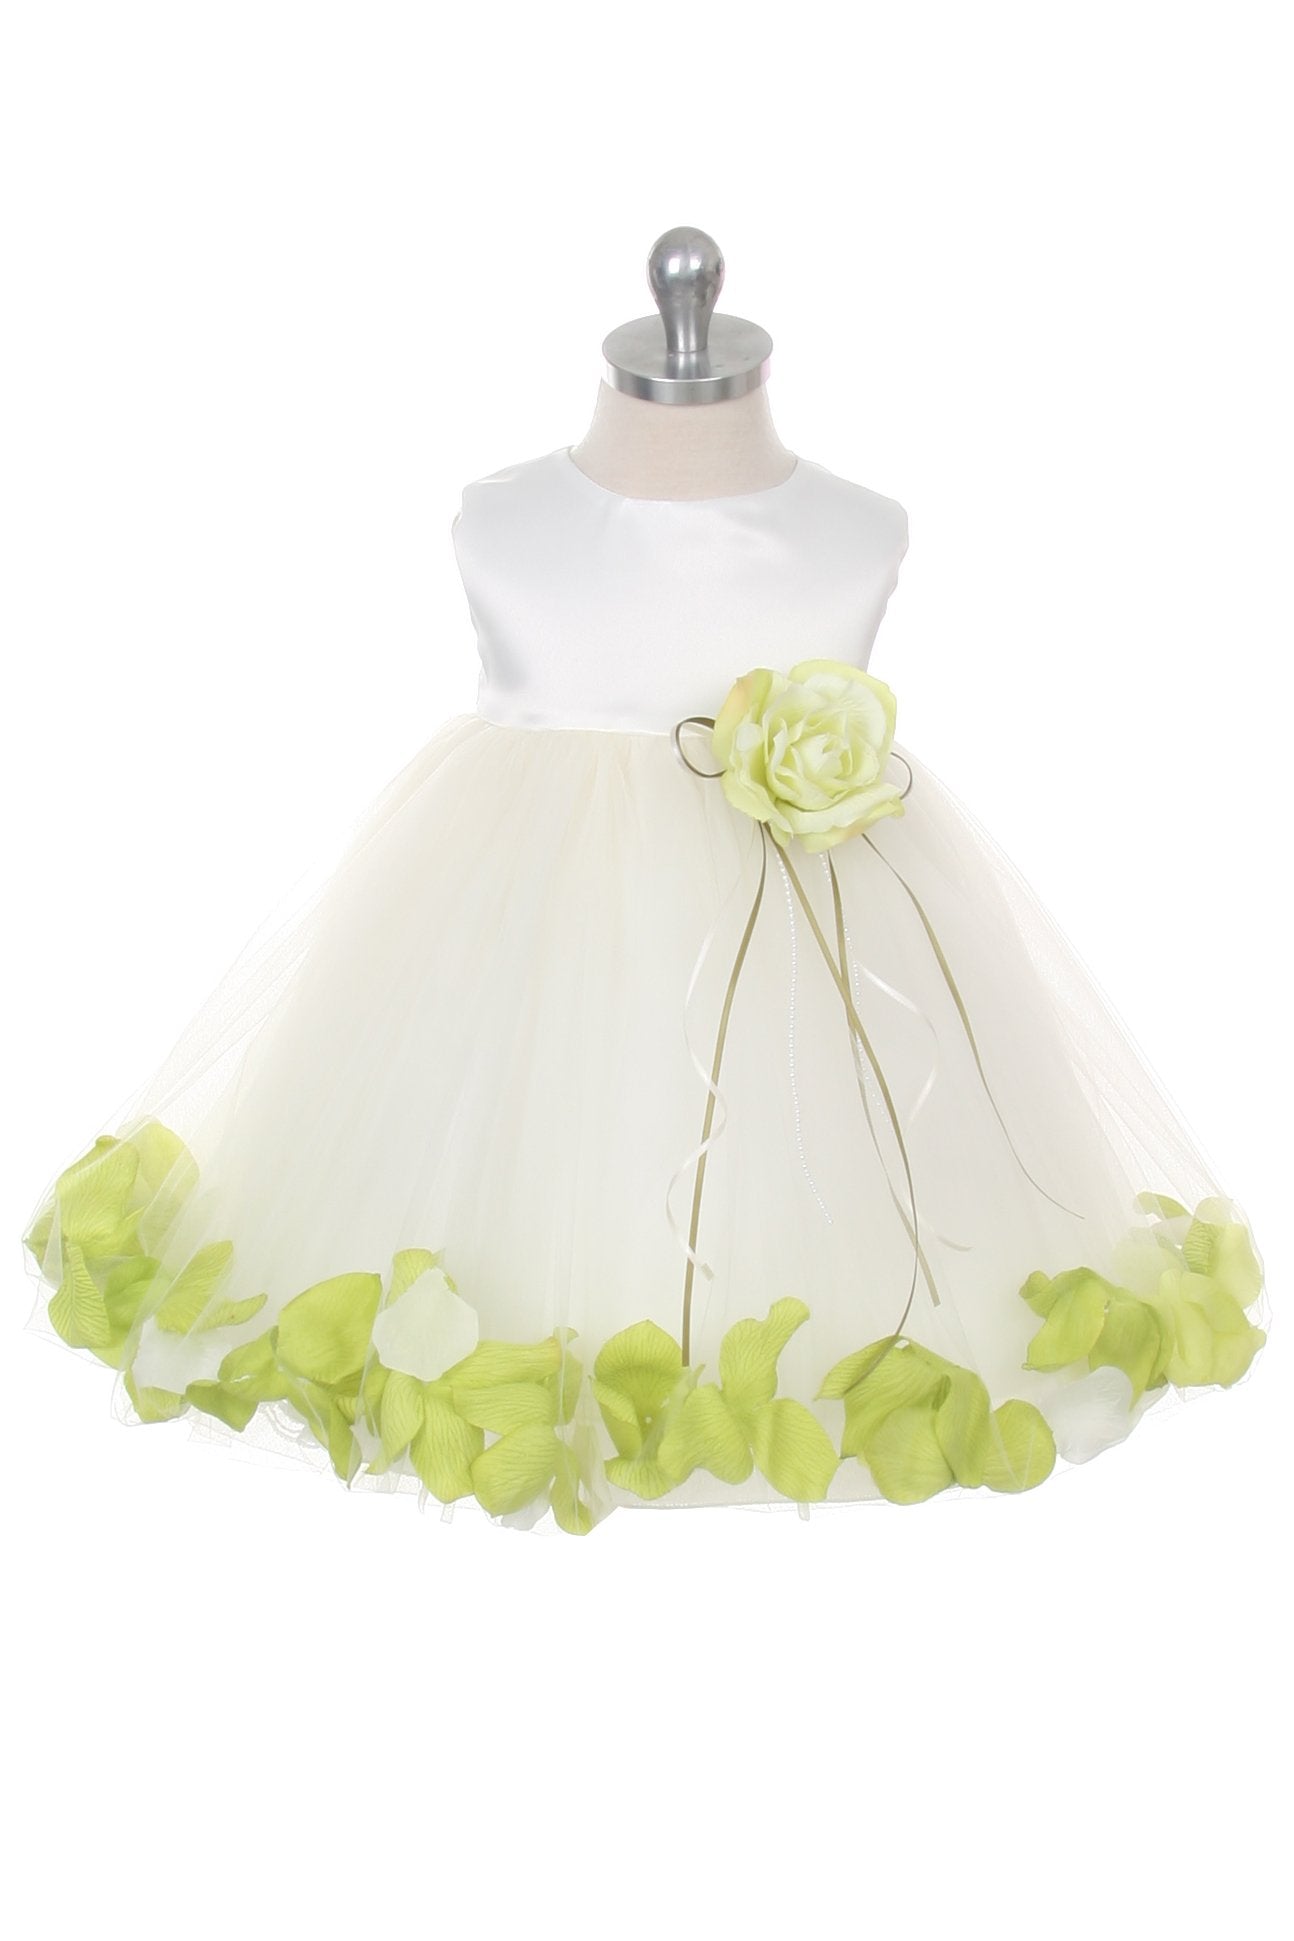 Dress - Satin Flower Petal Baby Dress (White Dress)